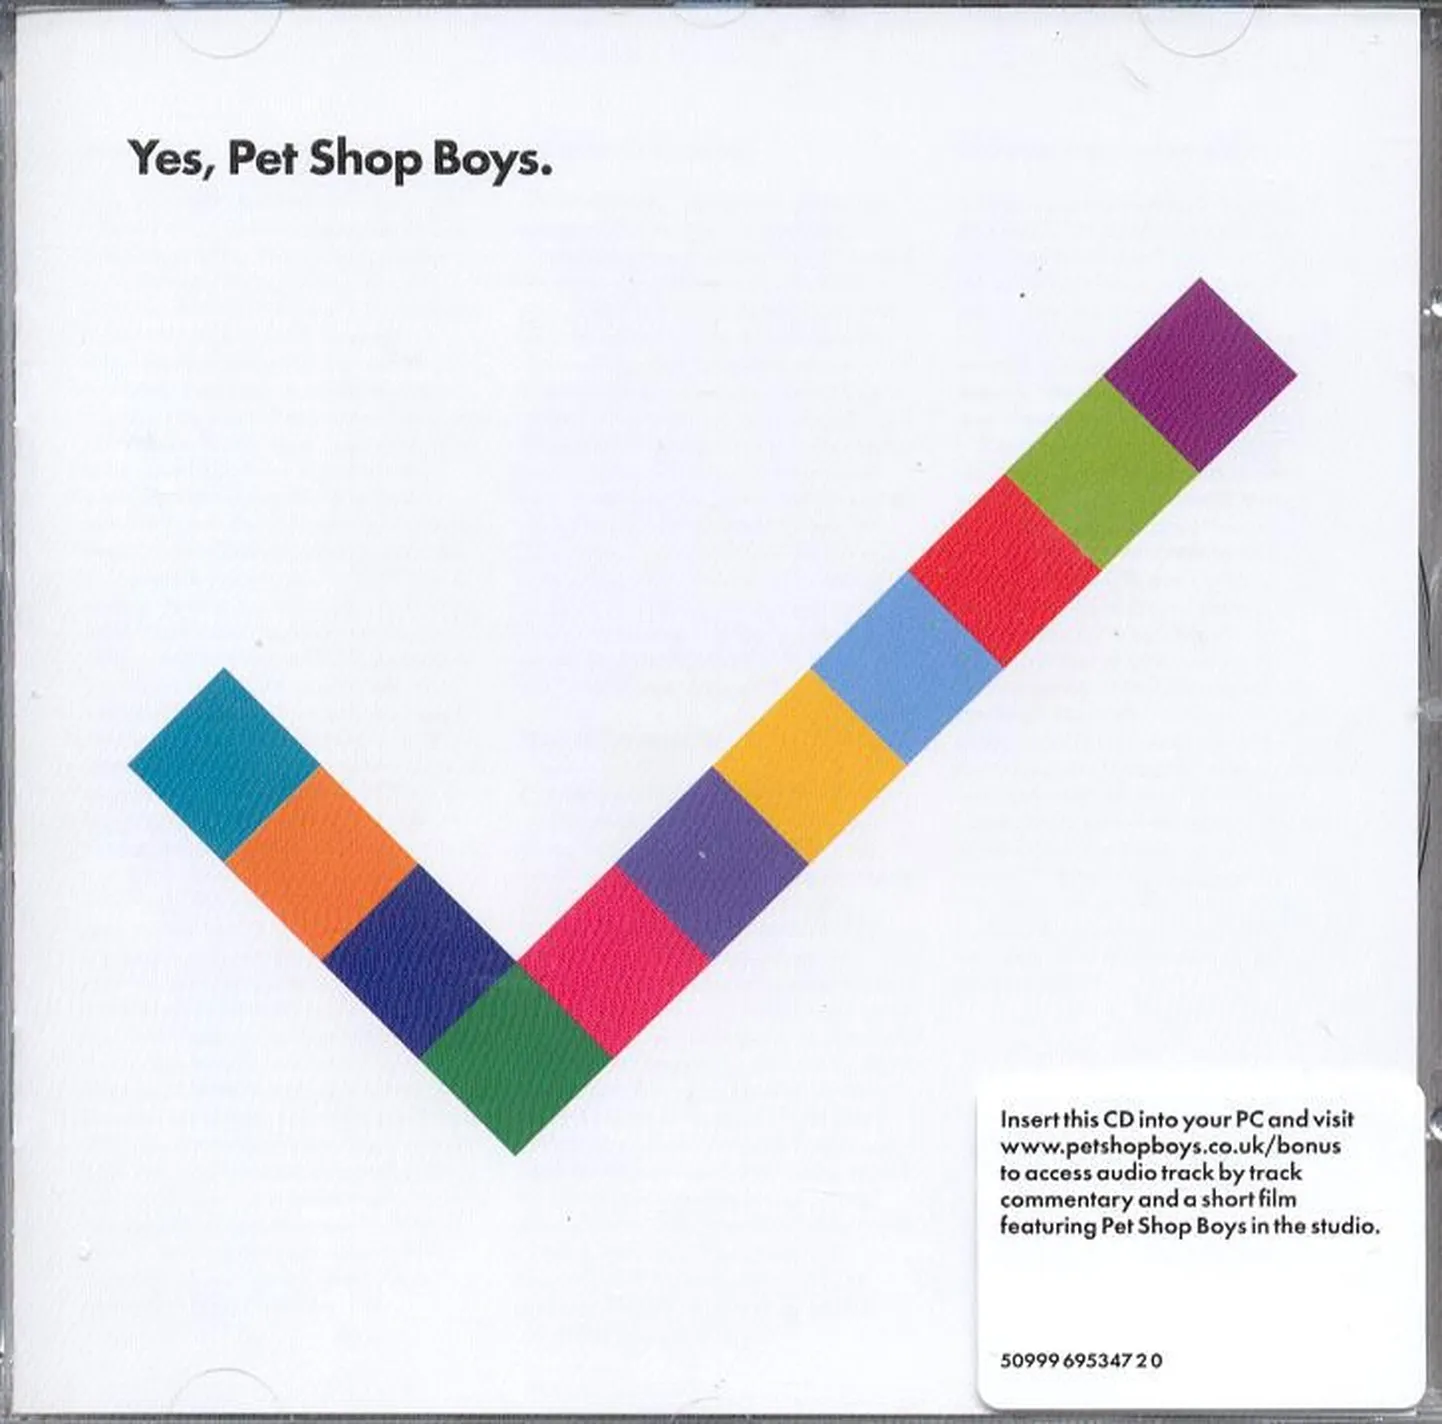 Pet Shop Boys "Yes".